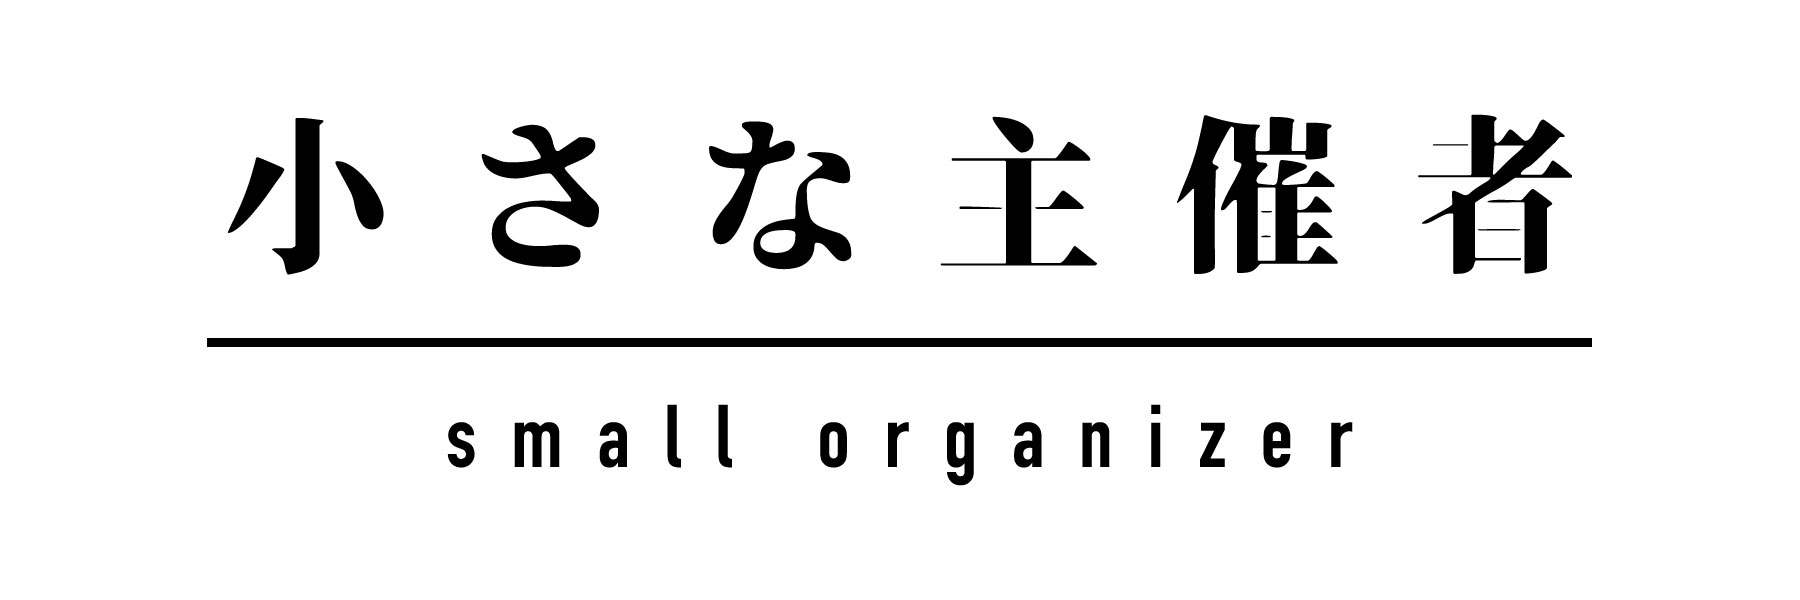 smallorganizer_logo